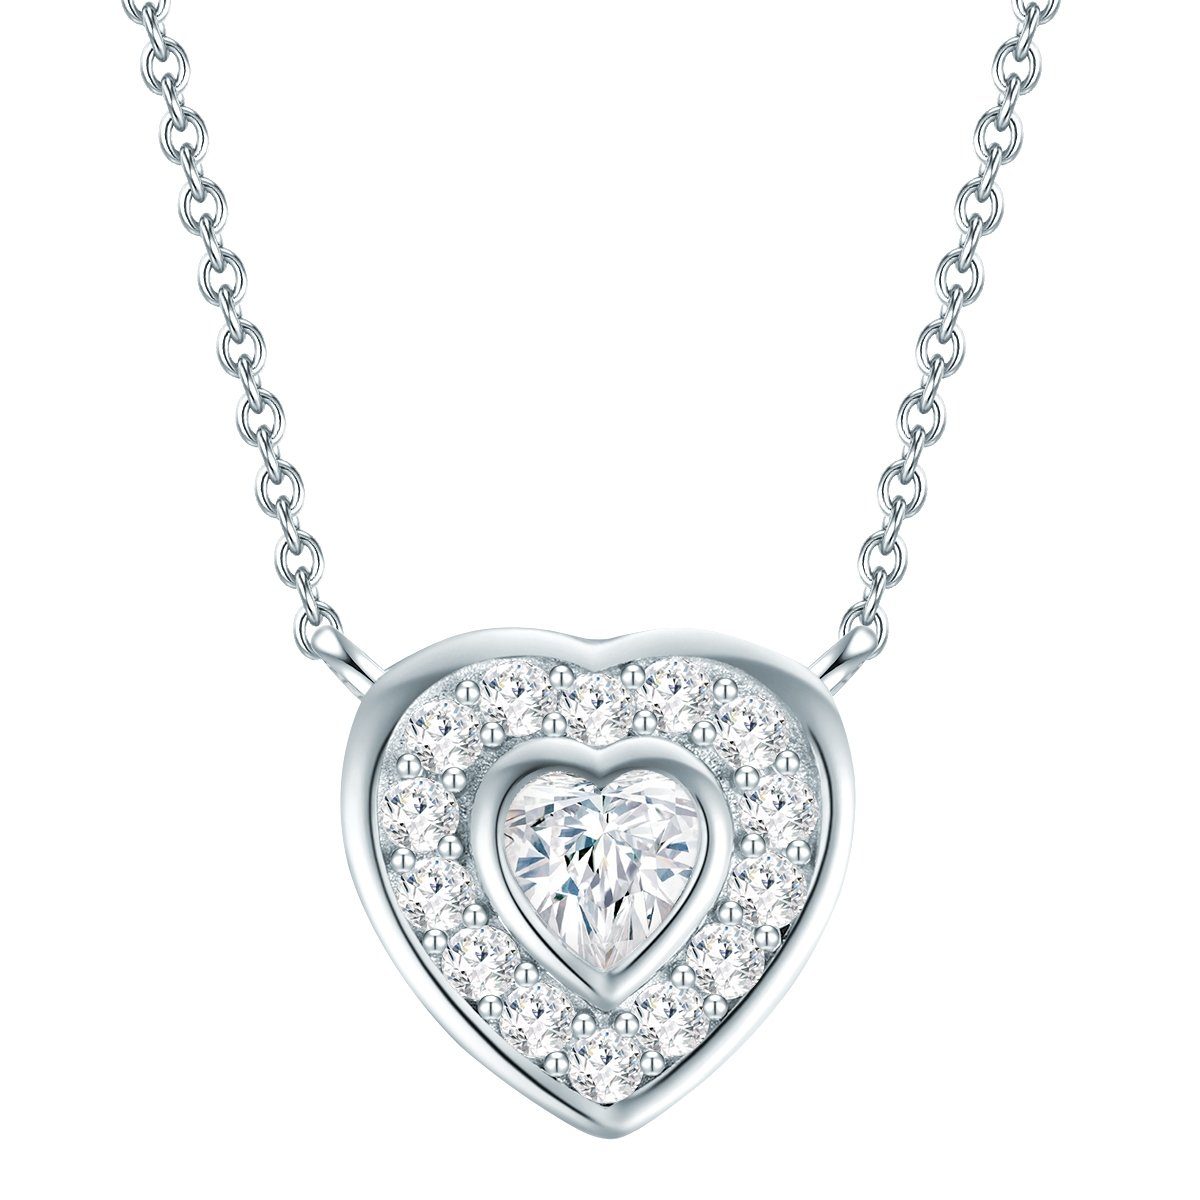 Rafaela Donata Silberkette Herz silber, aus Sterling Silber | Silberketten